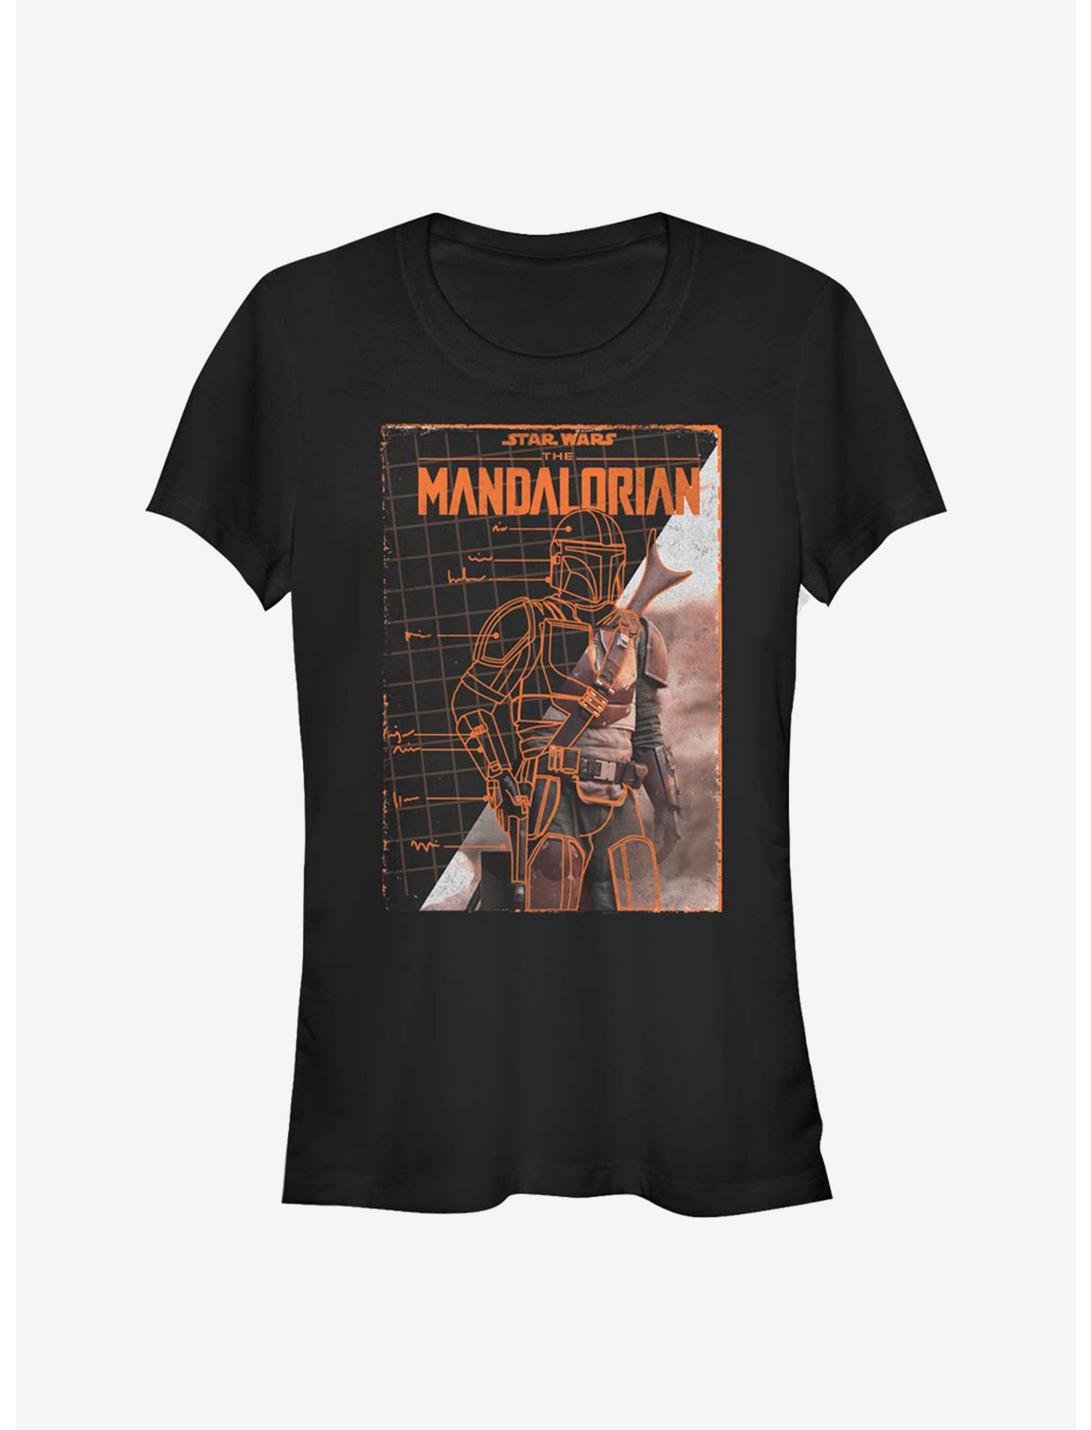 Star Wars The Mandalorian Gallery Poster Girls T-Shirt, BLACK, hi-res